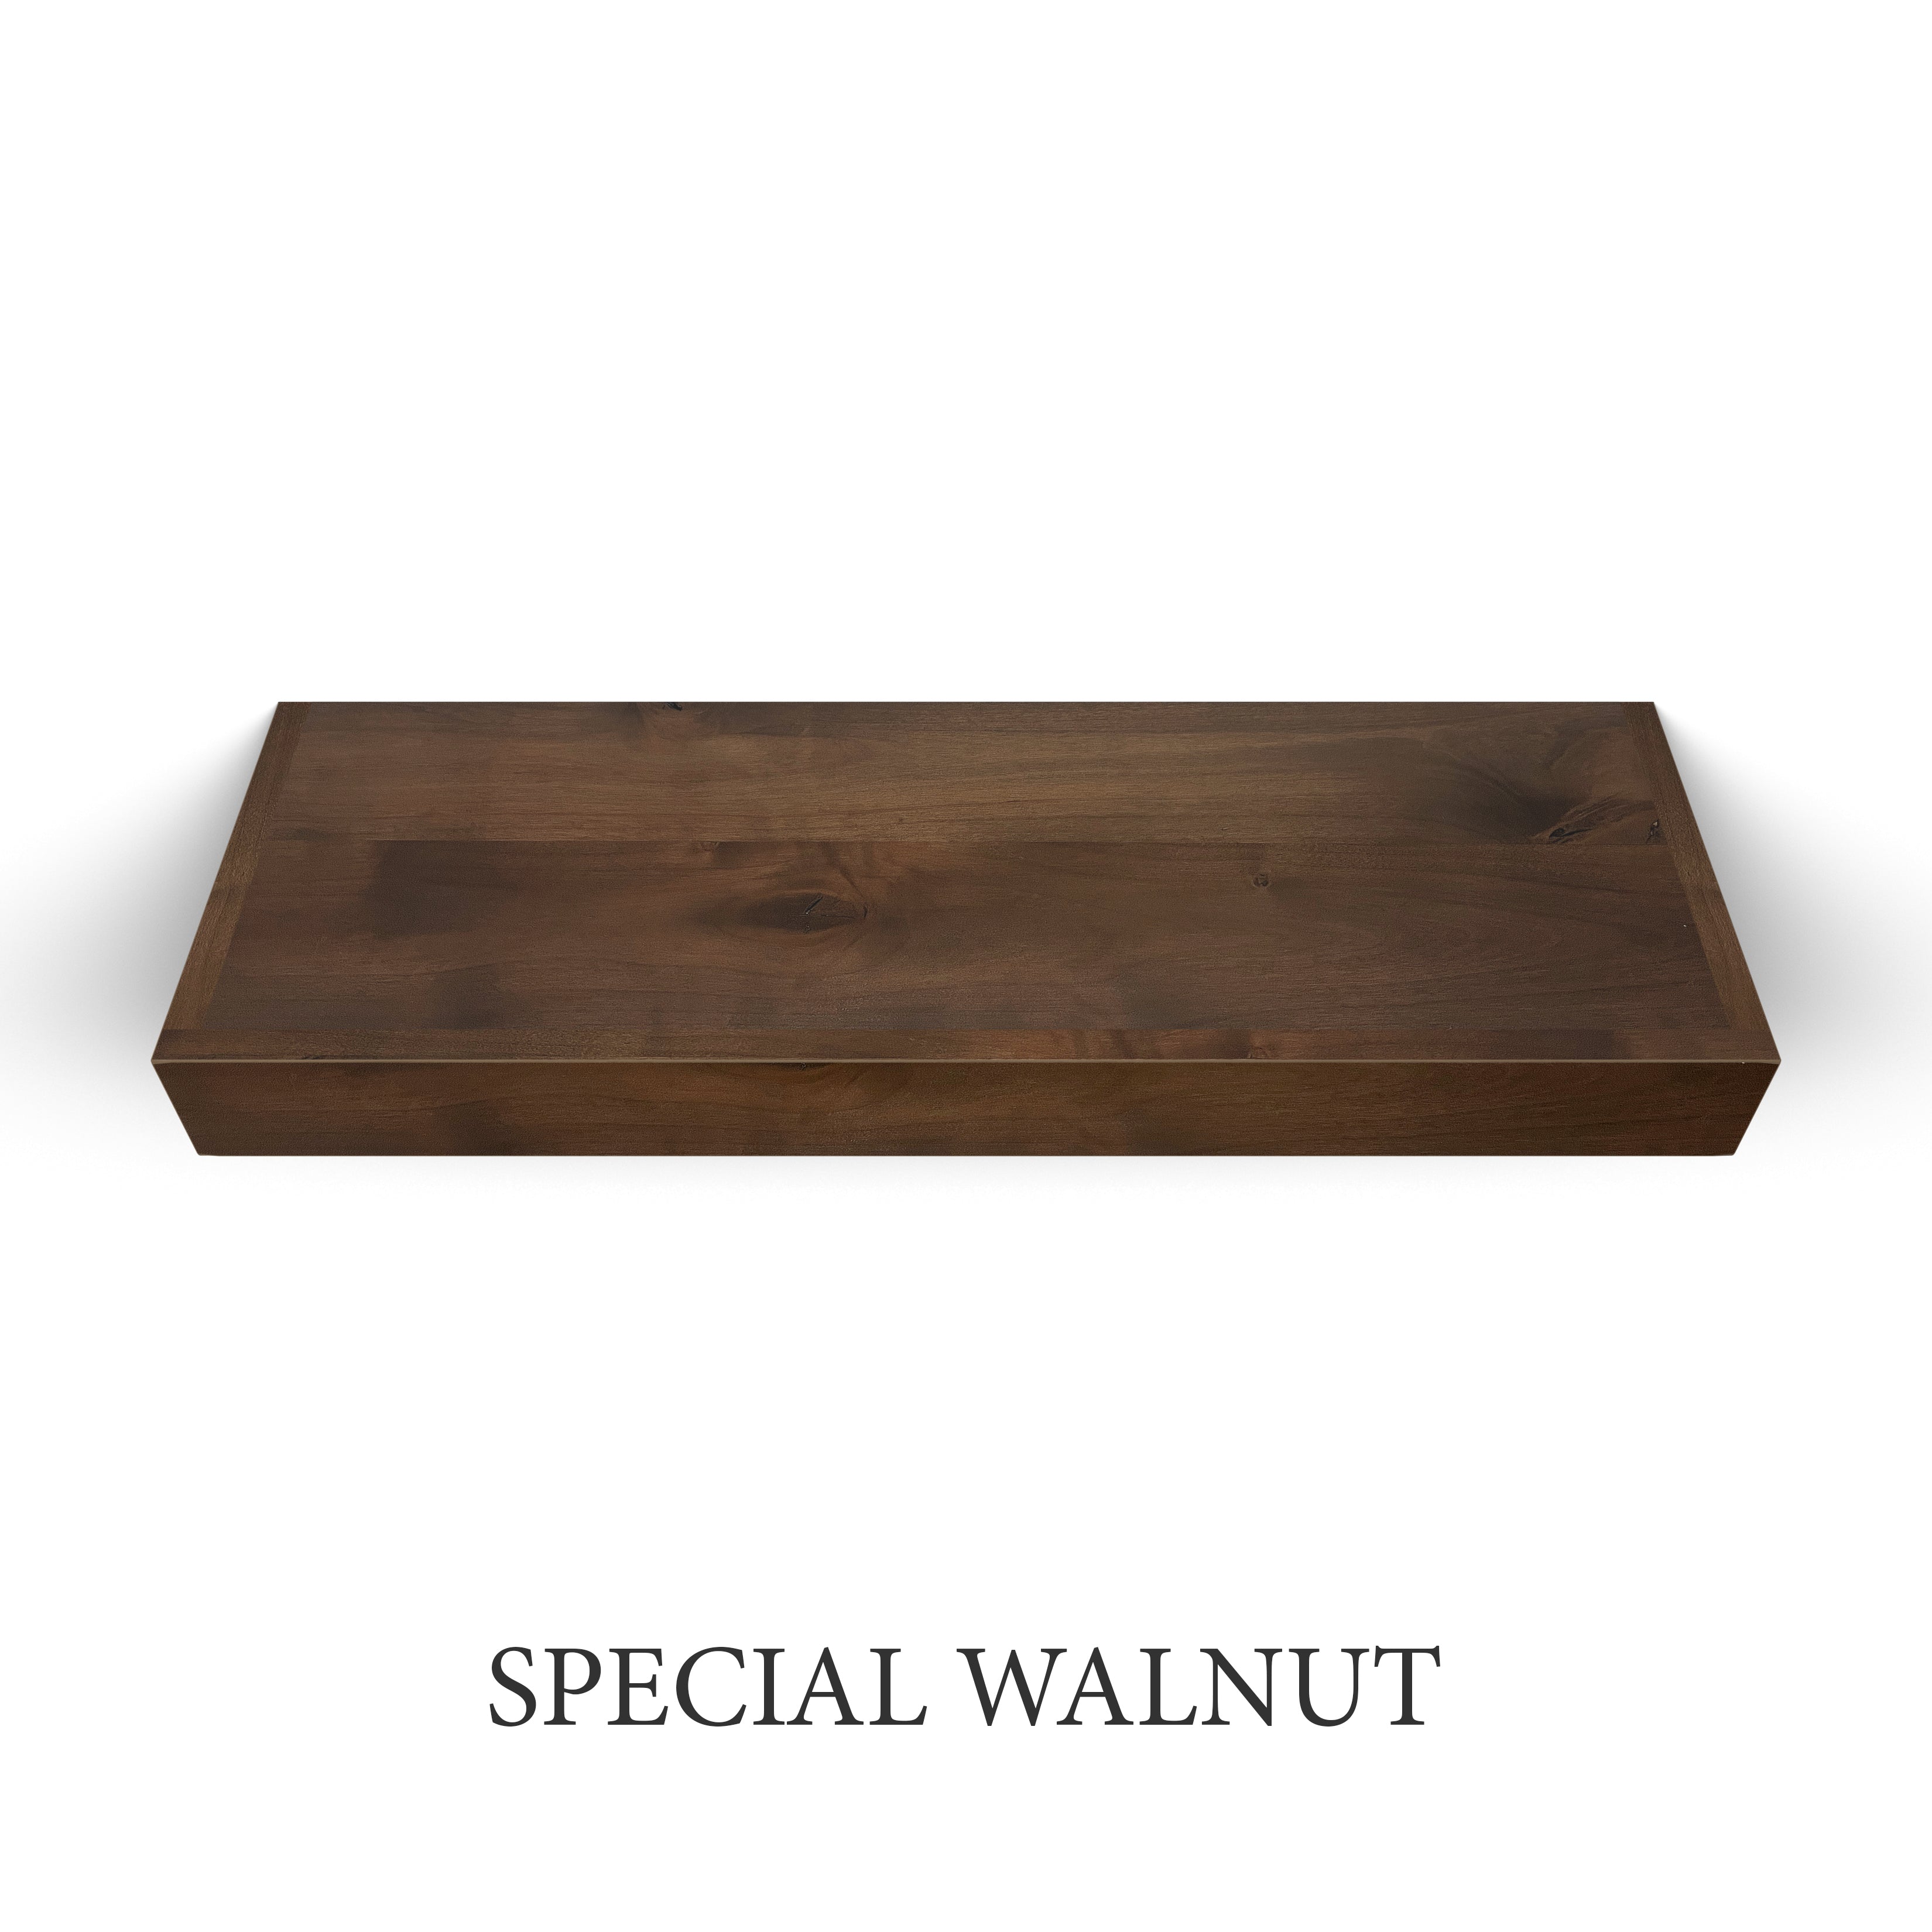 special walnut Rustic Alder 3 Inch Thick Floating Shelf